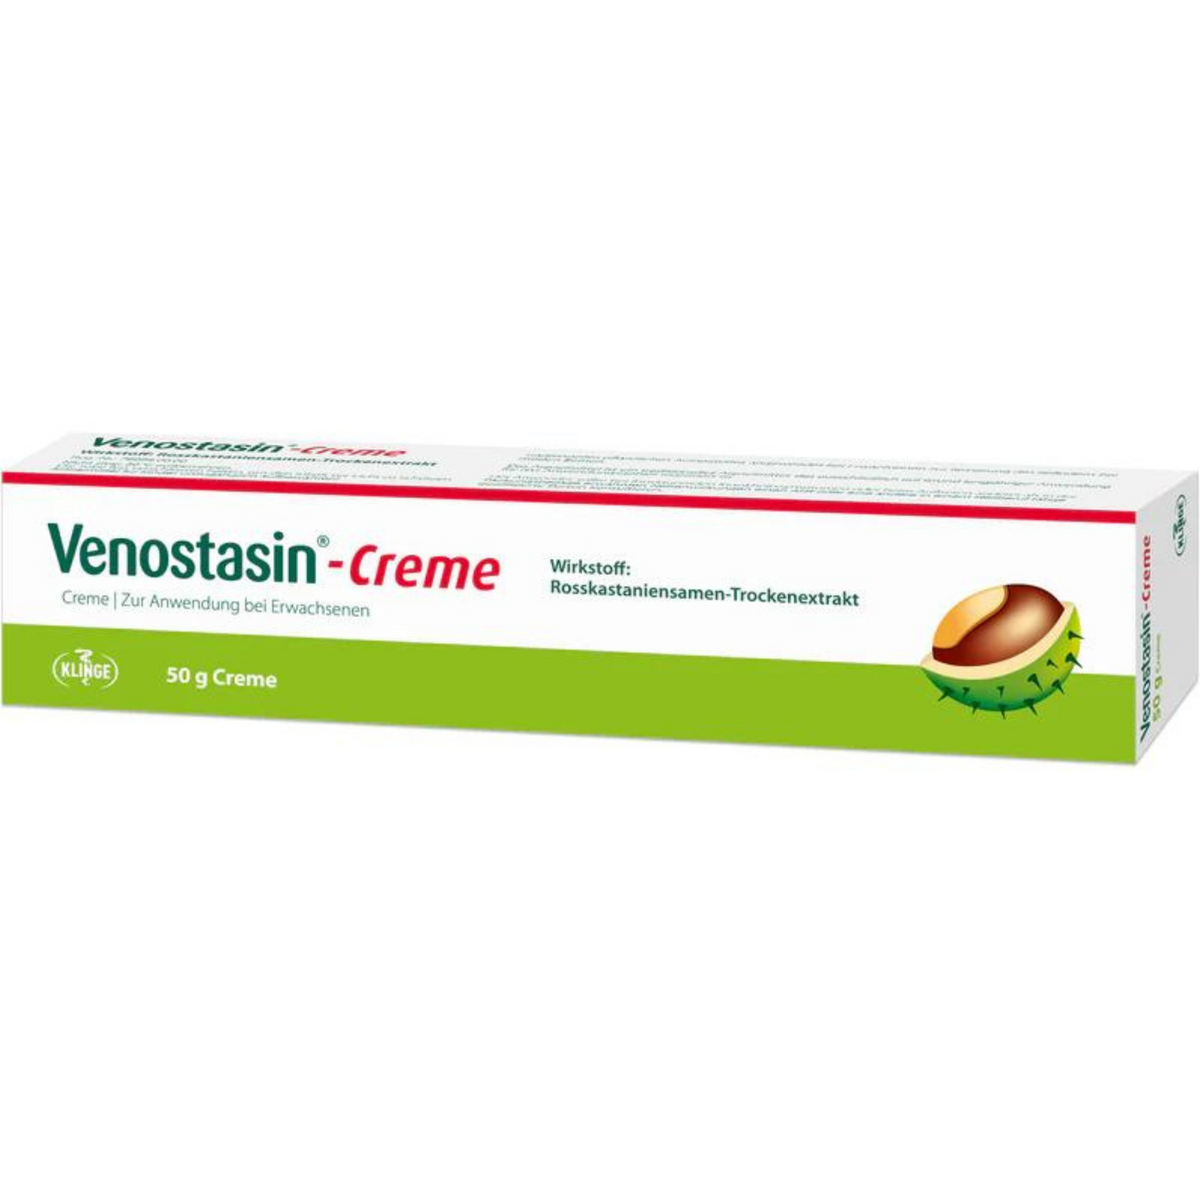 Primary image of Venostasin Creme